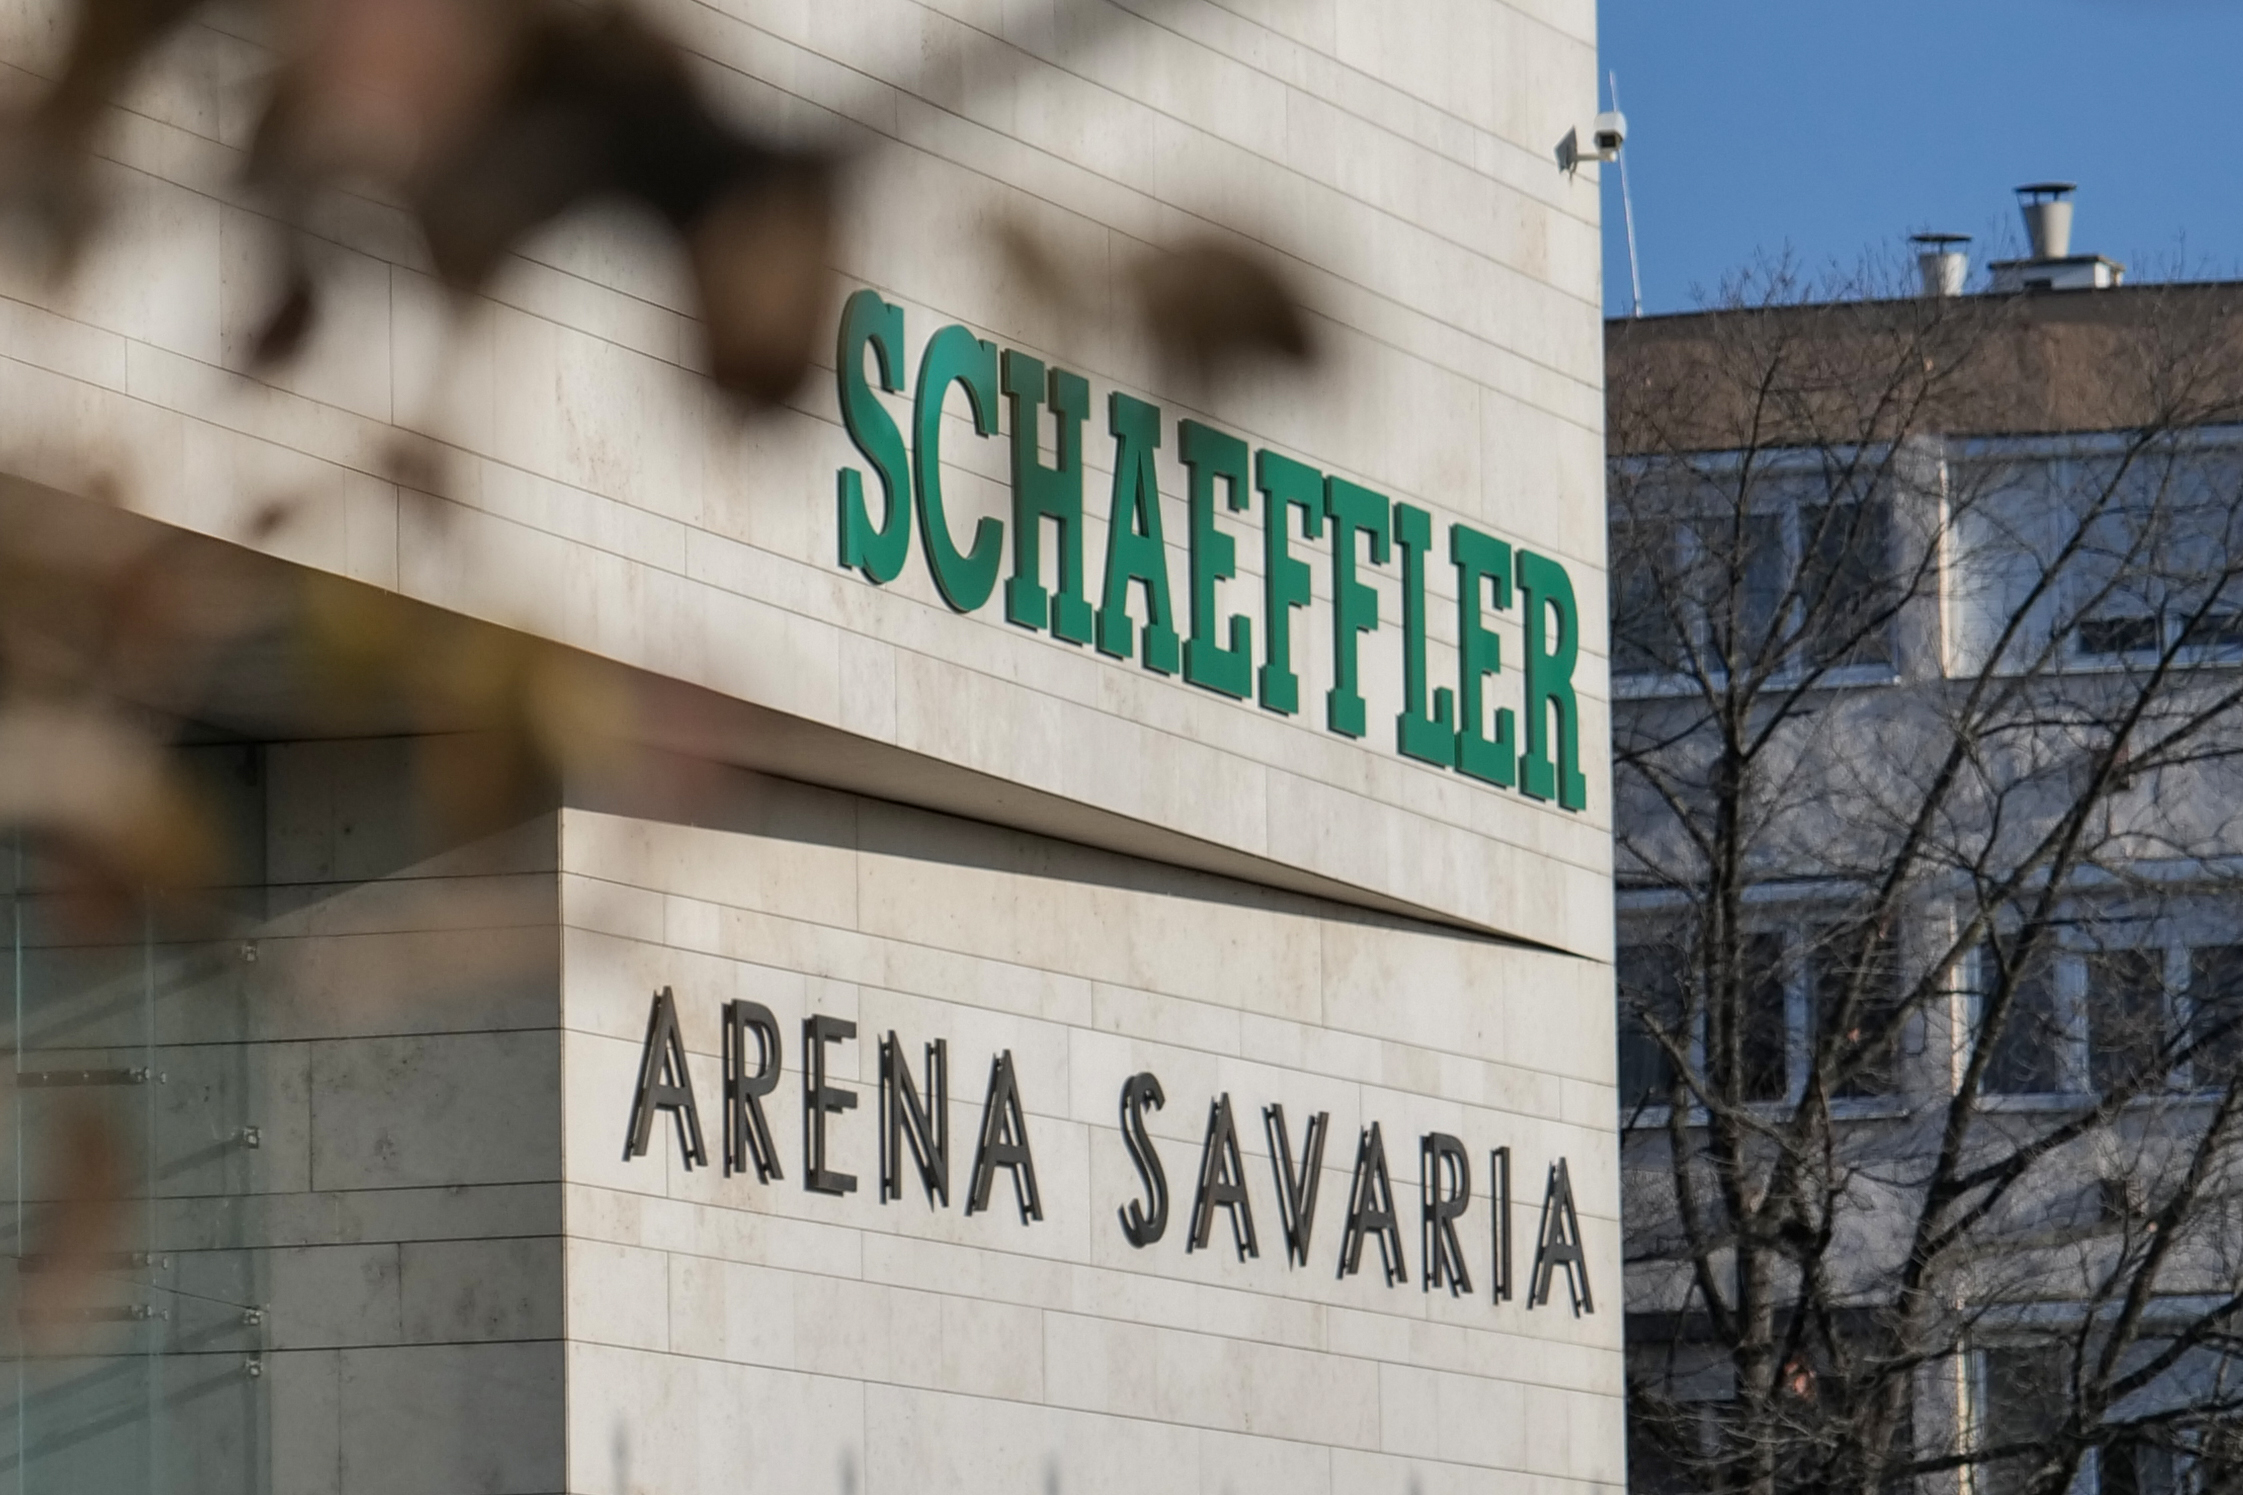 Schaeffler Arena Savaria